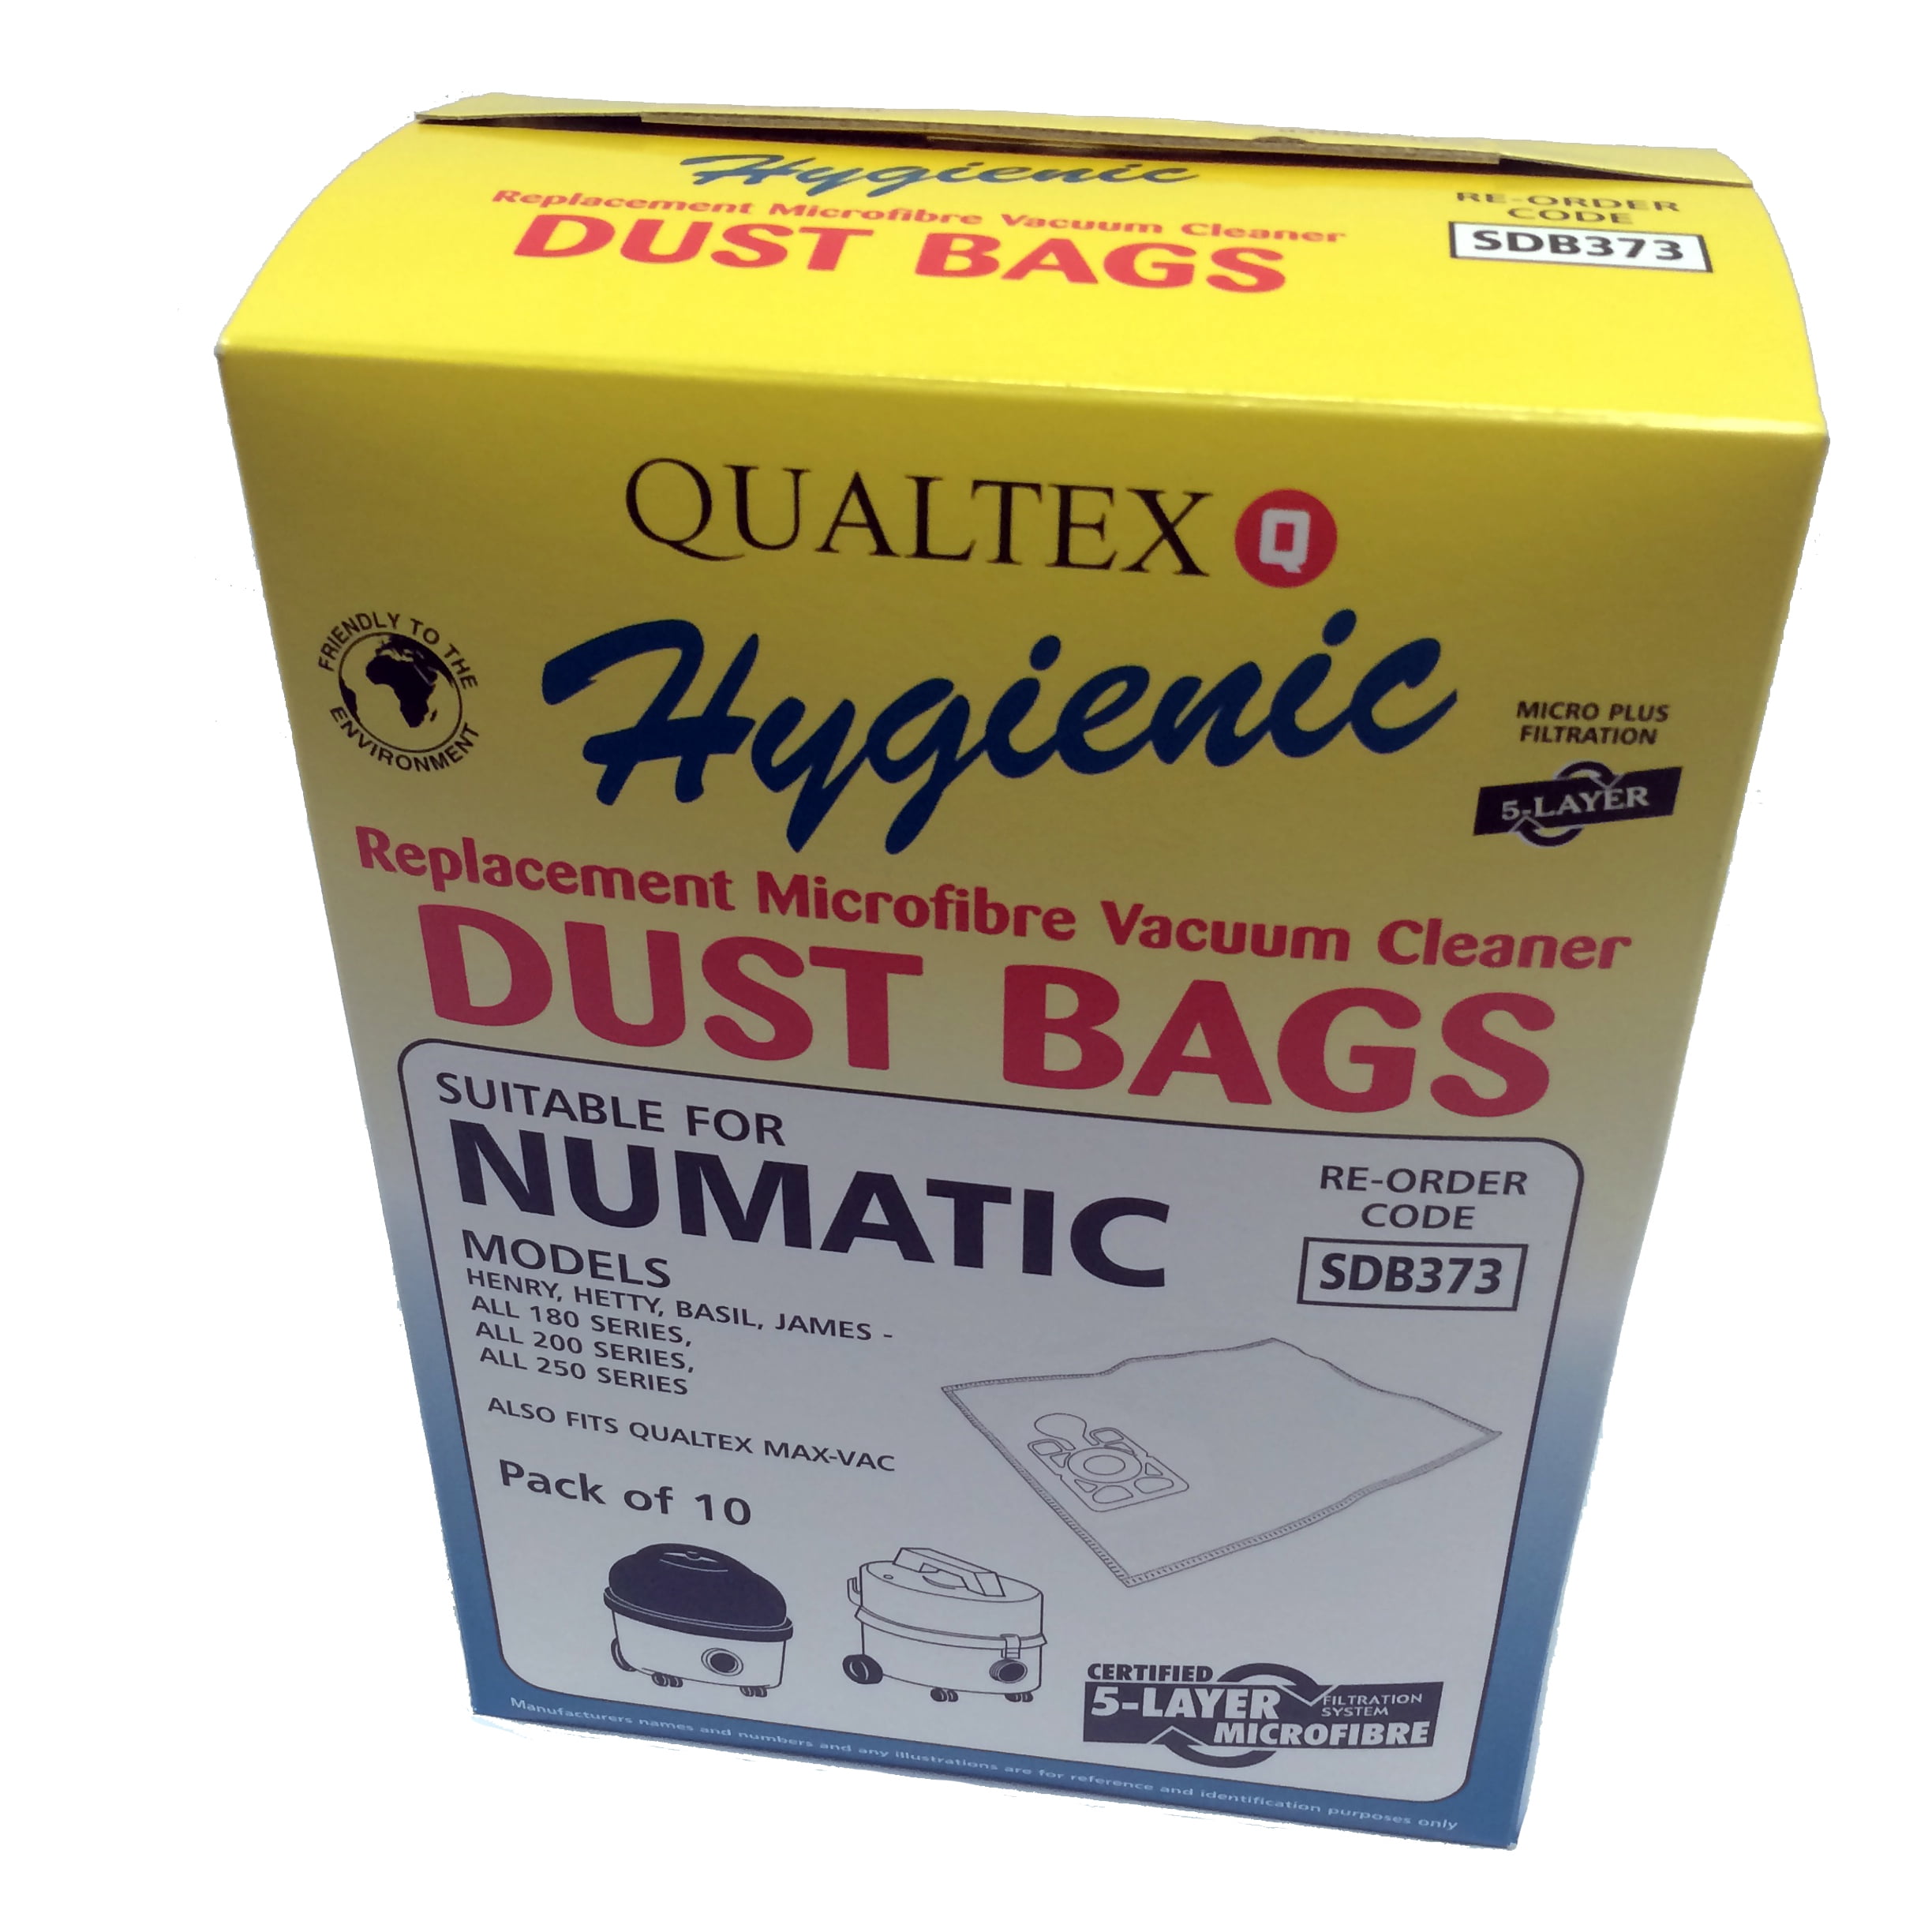 Henry Hetty James Basil & Hound Models Vacuum Cleaner Dust Bags x 20 Pack 